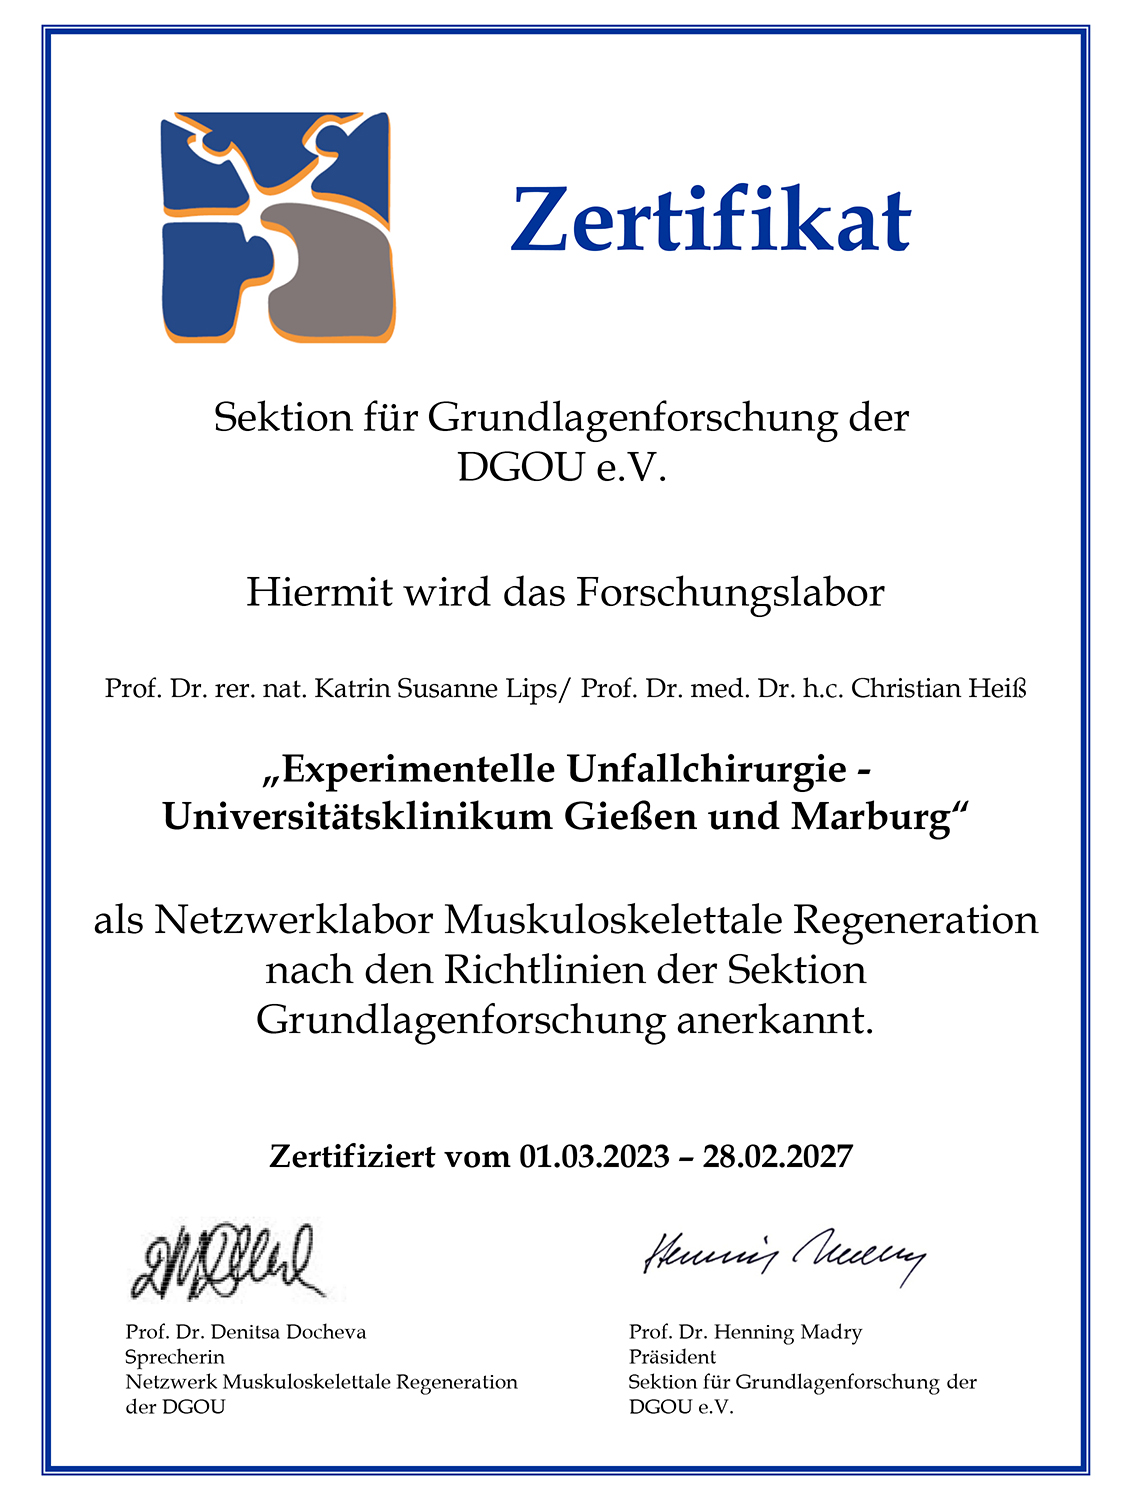 Zertifikat_Grundlagenforschung_27.jpg